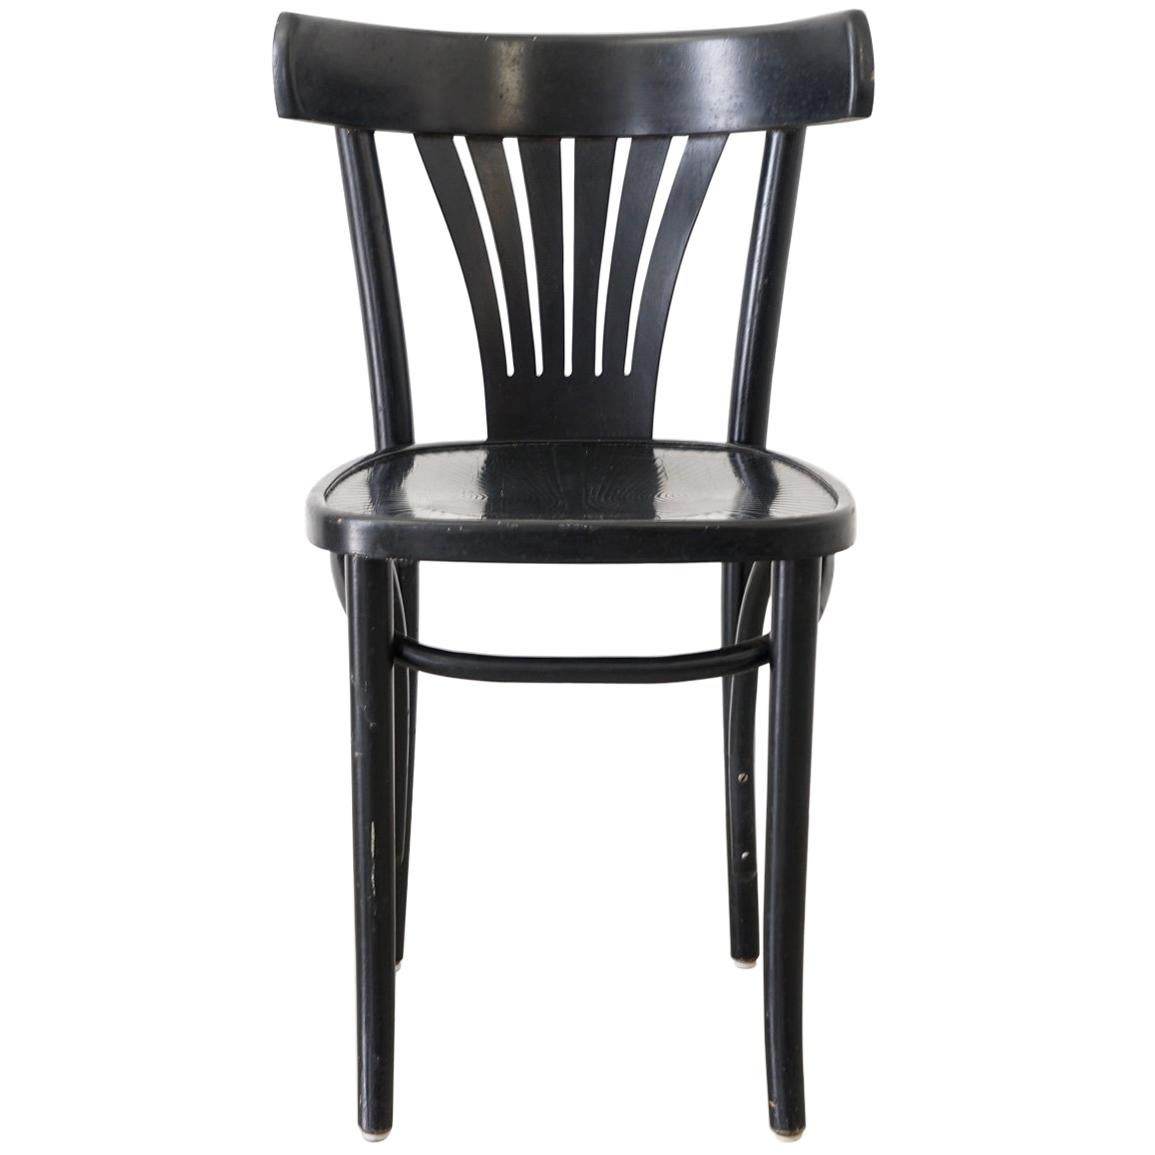 Black Bentwood Chair from ZPM Radomsko, Poland